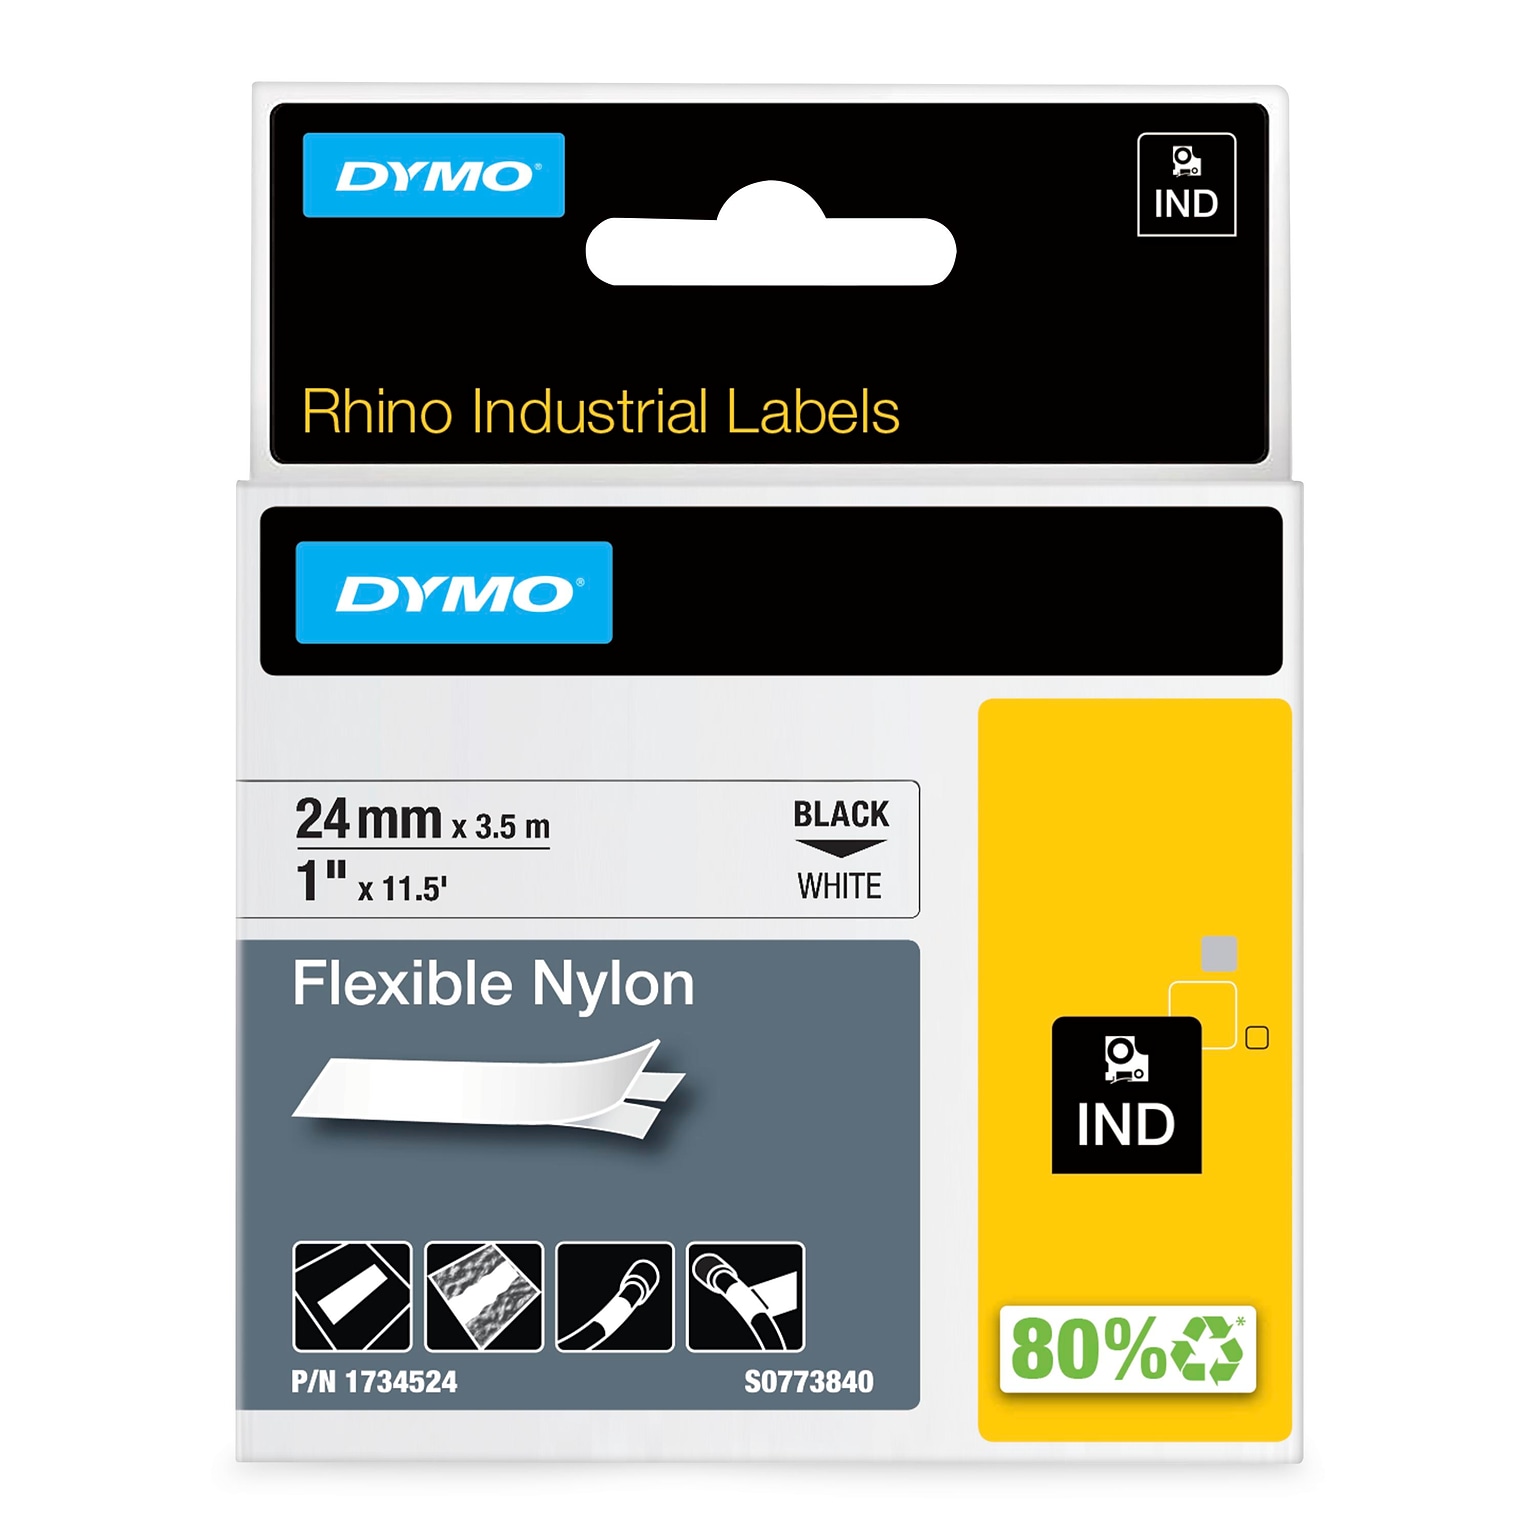 DYMO Rhino Industrial 1734524 Flexible Nylon Label Maker Tape, 1 x 11-1/2, Black on White (1734524)